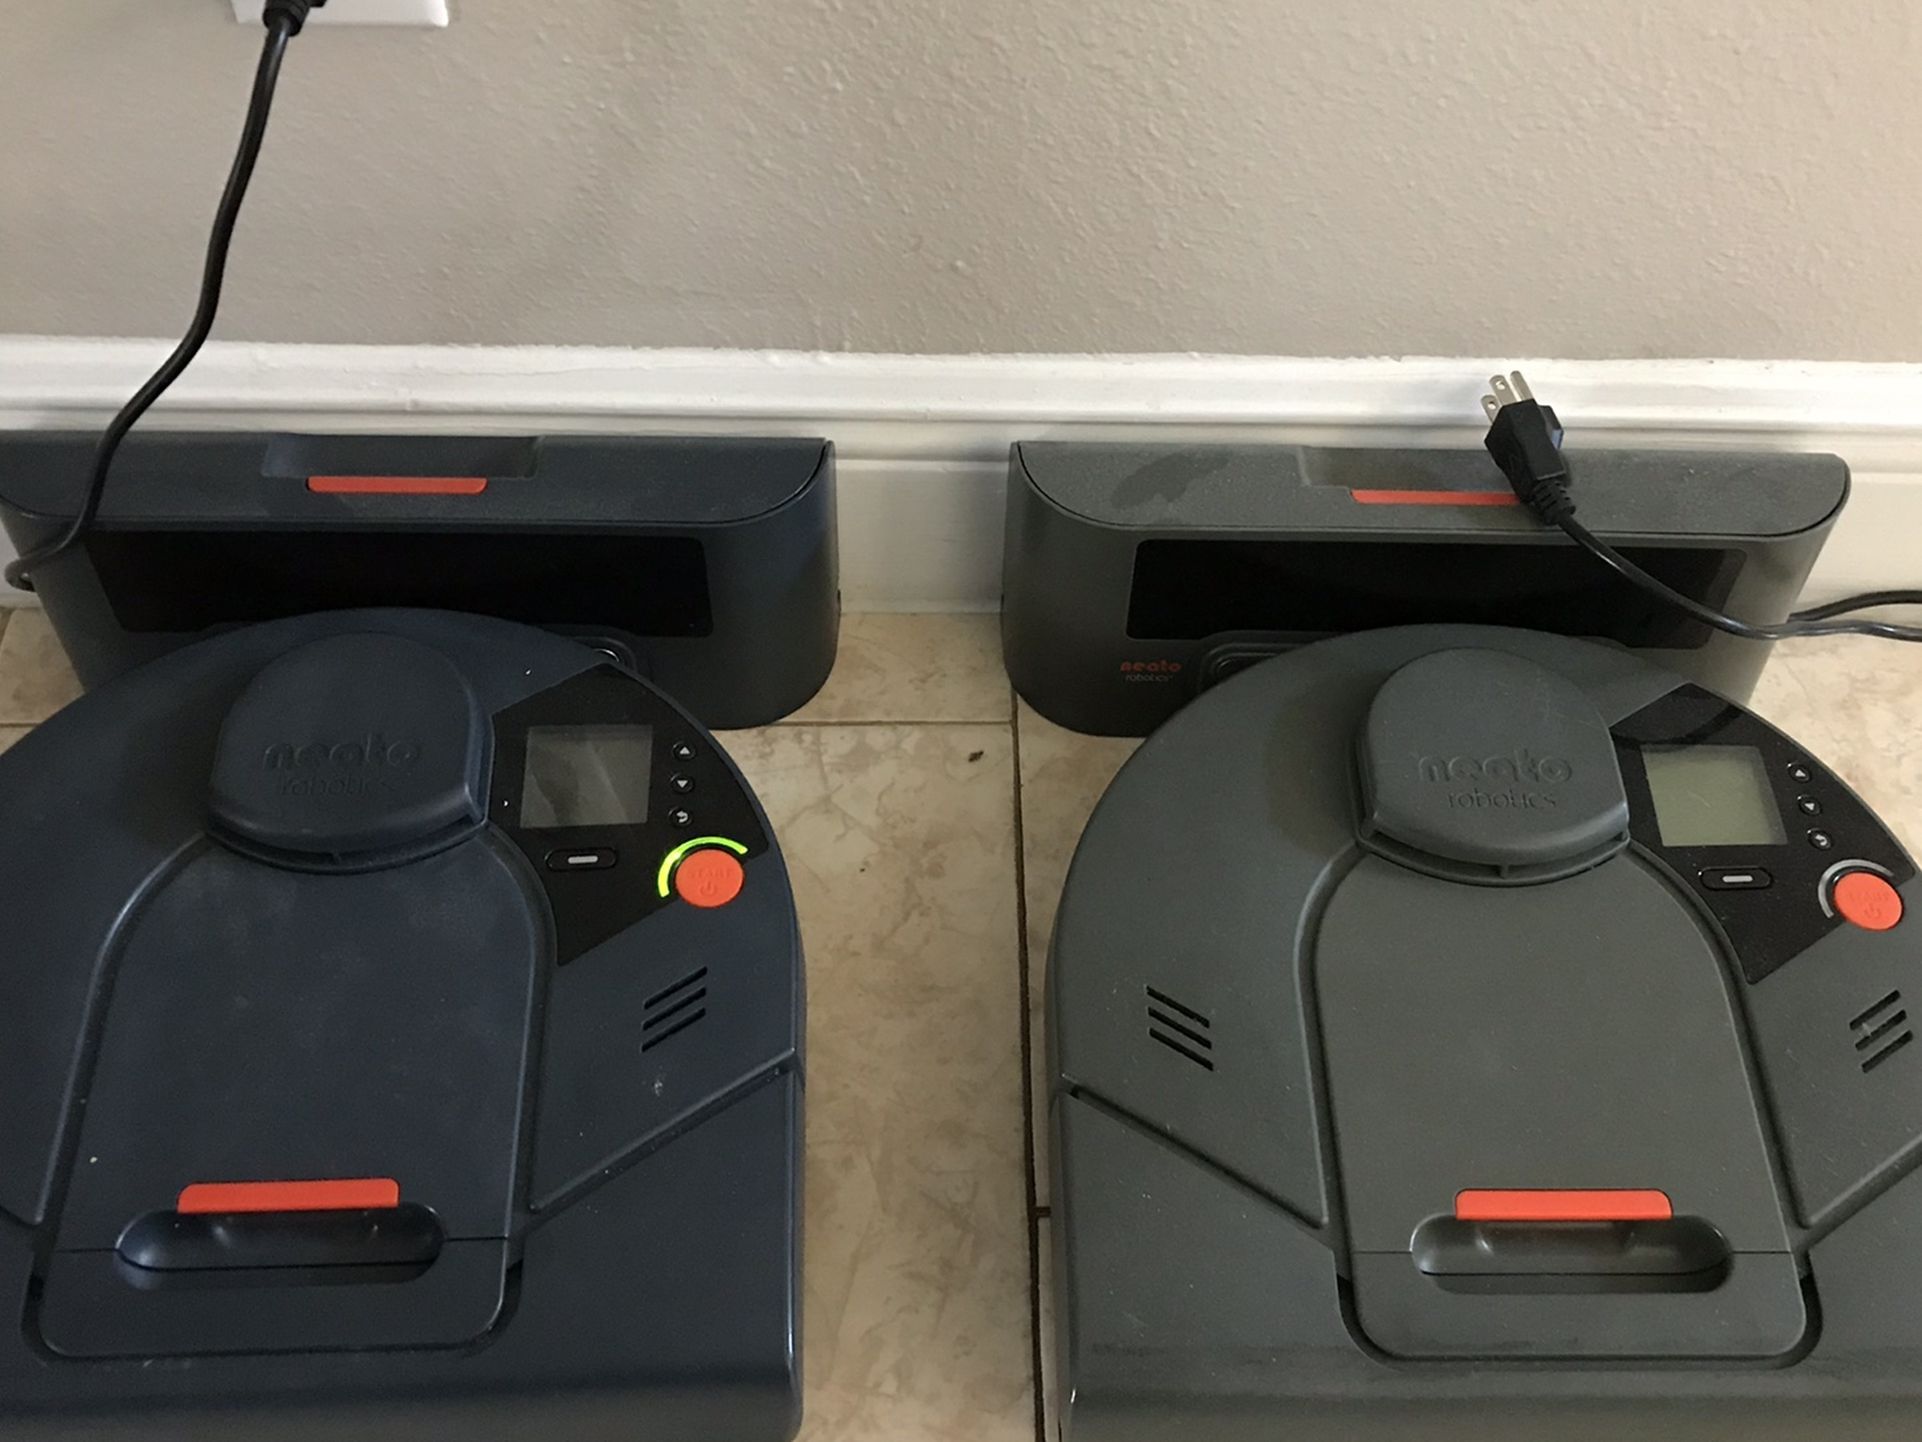 2 Neato Vacuum robots